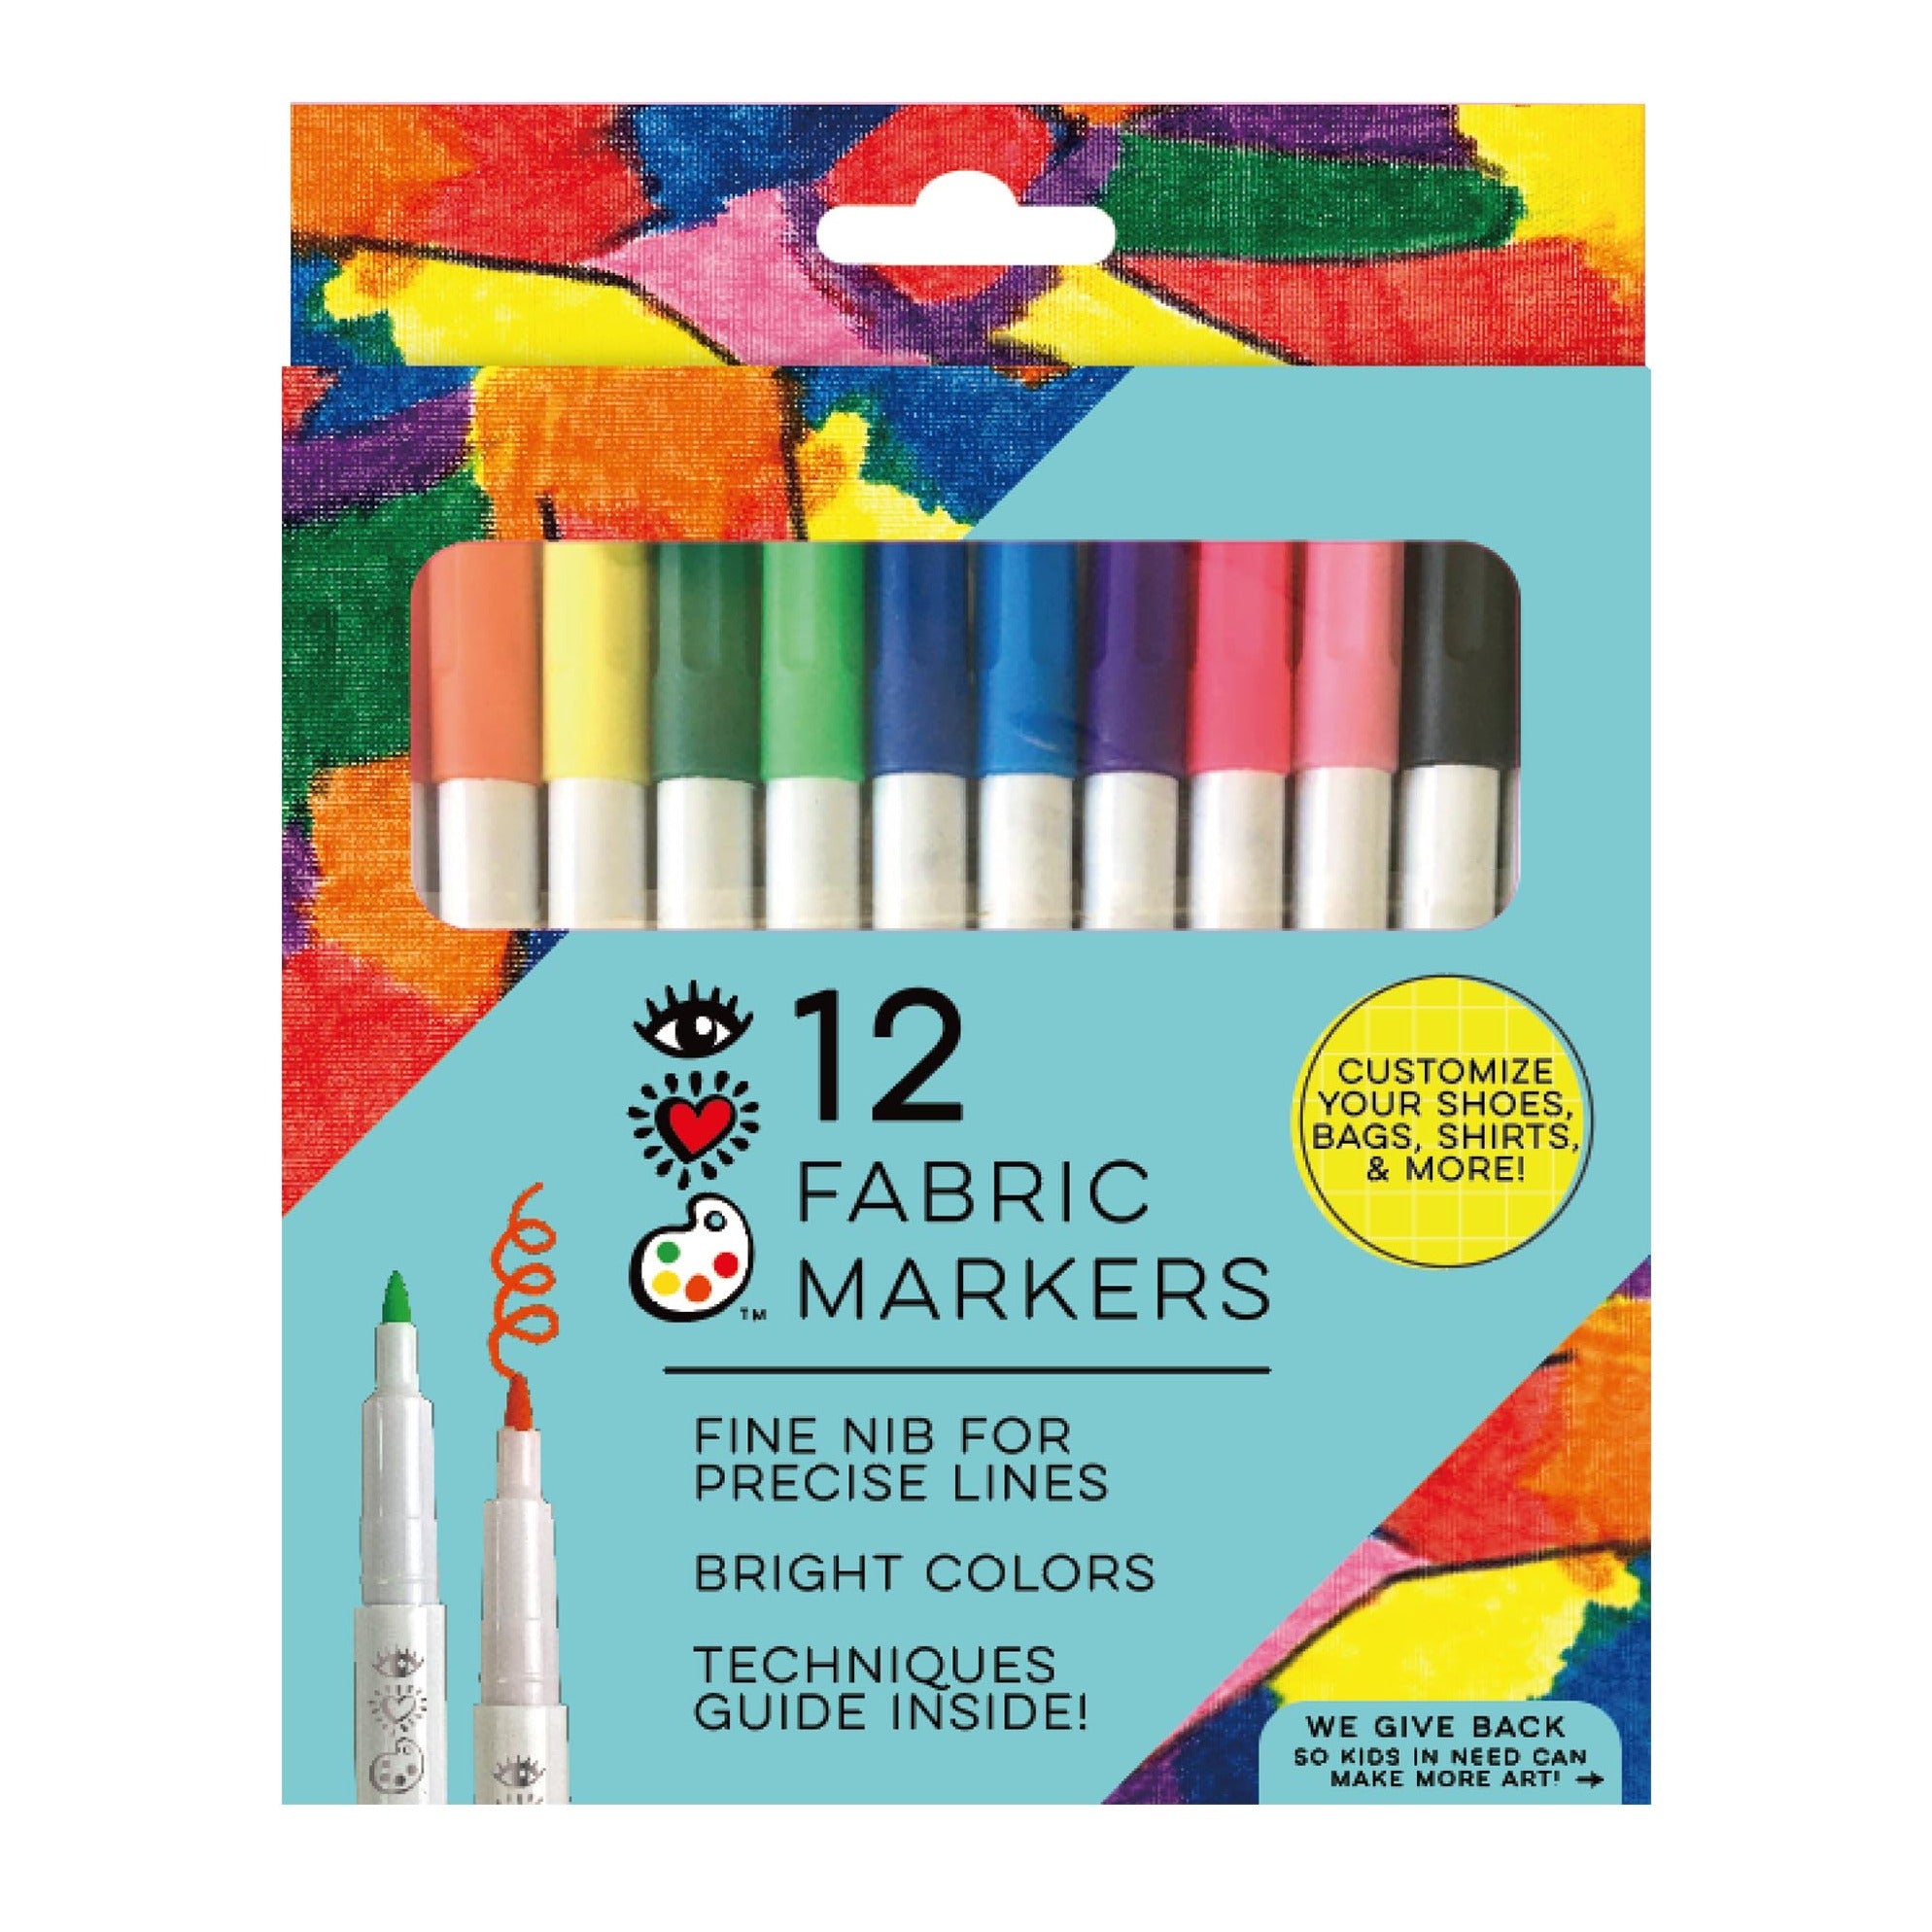 Paint Brushes Fabric Crafts, Acrylic Marker Brush Pen